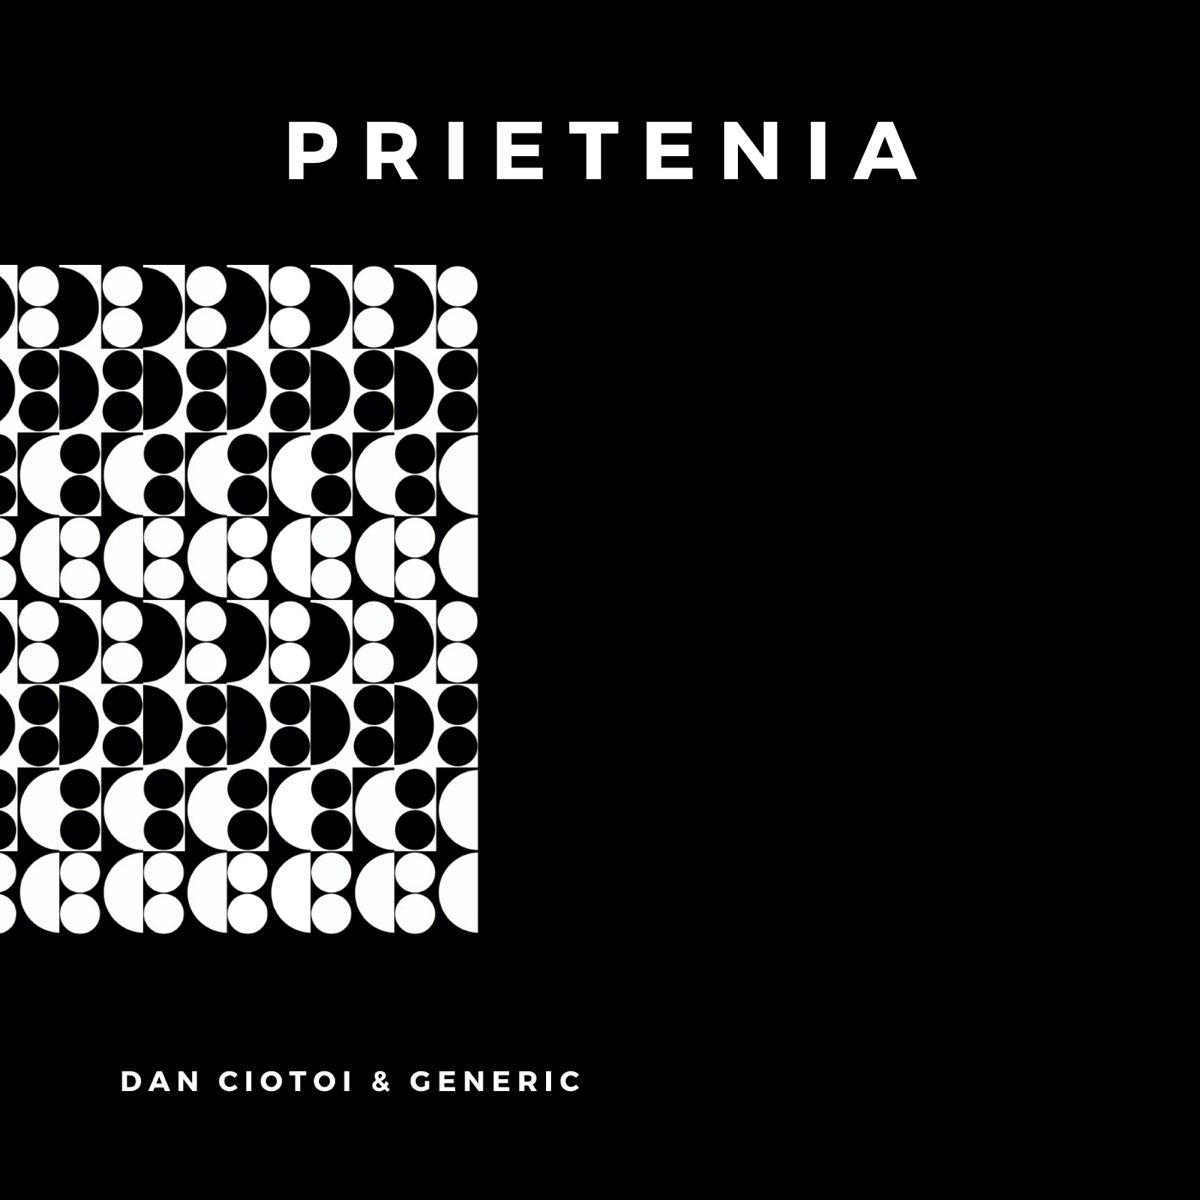 Prietenia by Dan Ciotoi & Generic on Apple Music